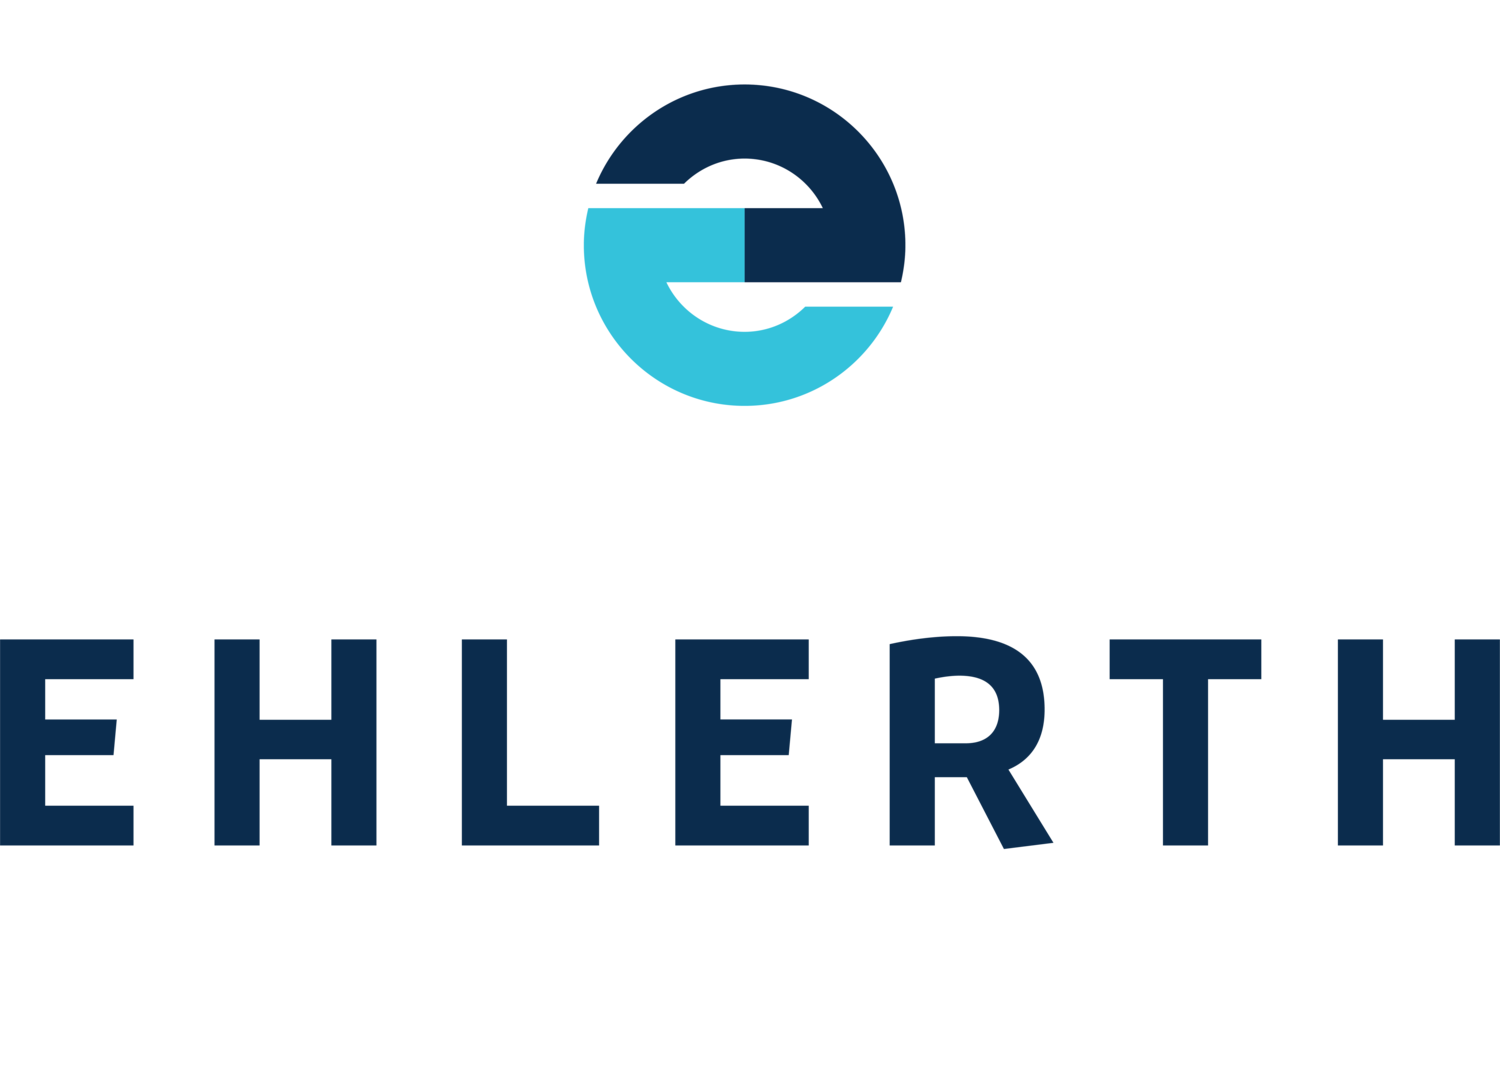 Ehlerth Electrical